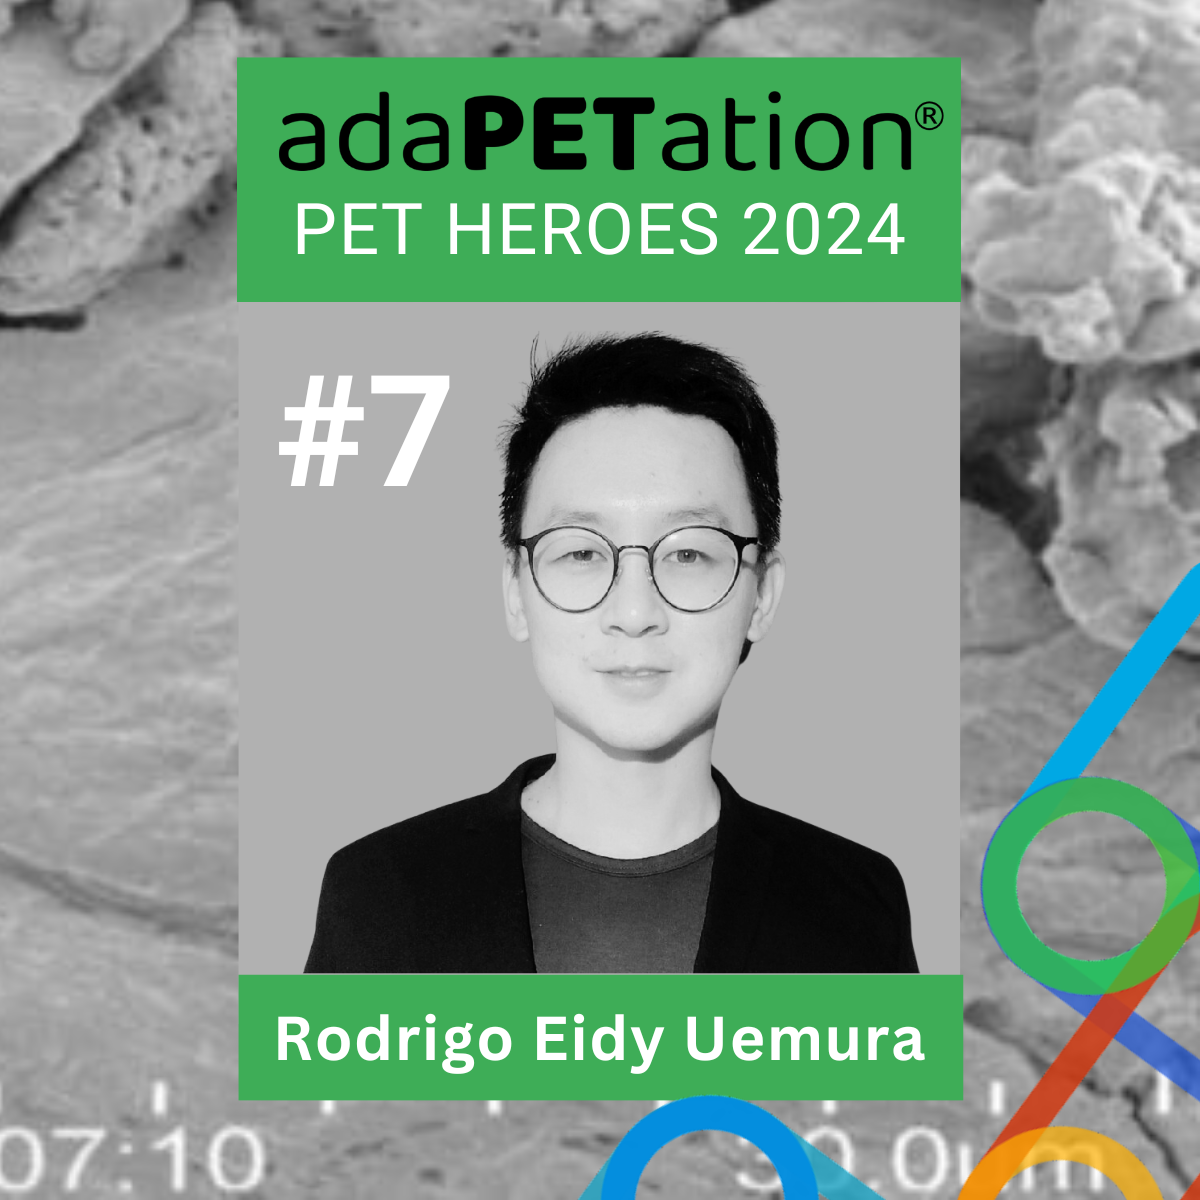 Our seventh nominee for PET Heroes 2024 is Rodrigo Eidy Uemura of Litro de Luz